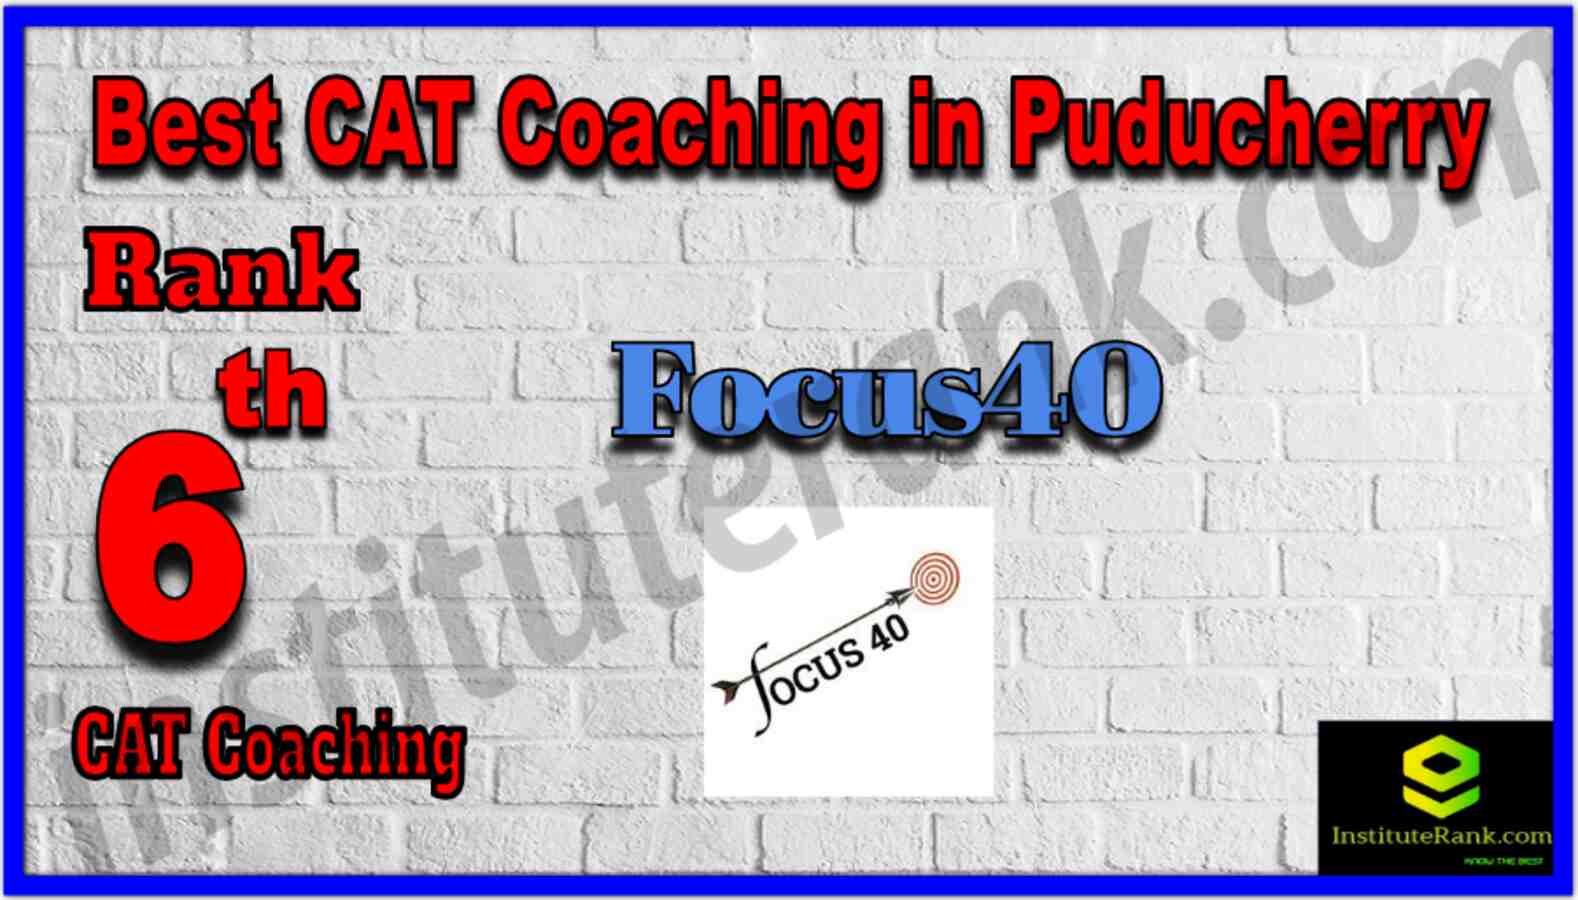 Rank 6 Best CAT Coaching in Puducherry